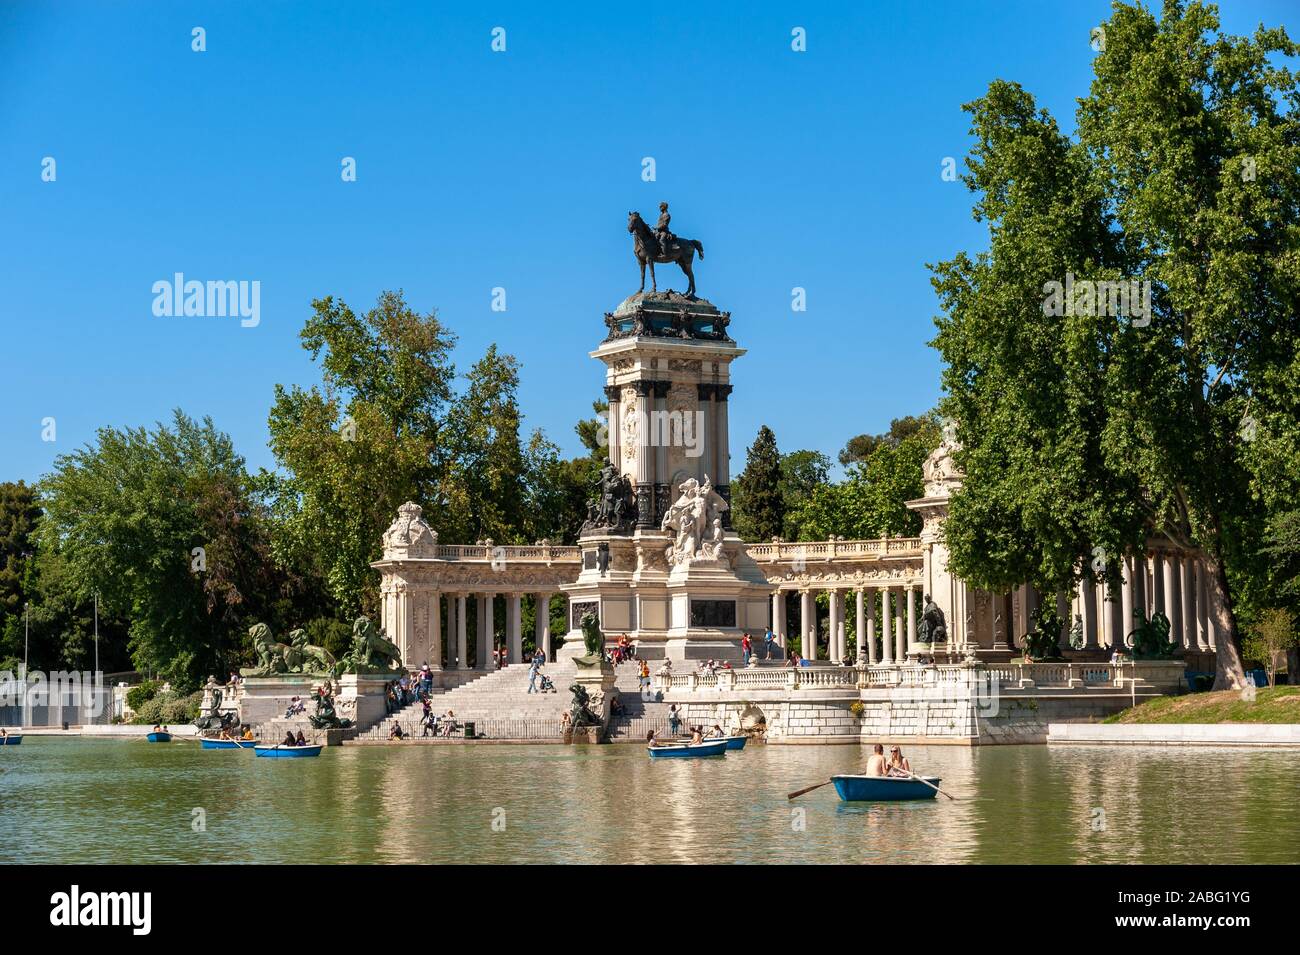 Boating lake at Retiro park, Madrid, Spain Stock Photo